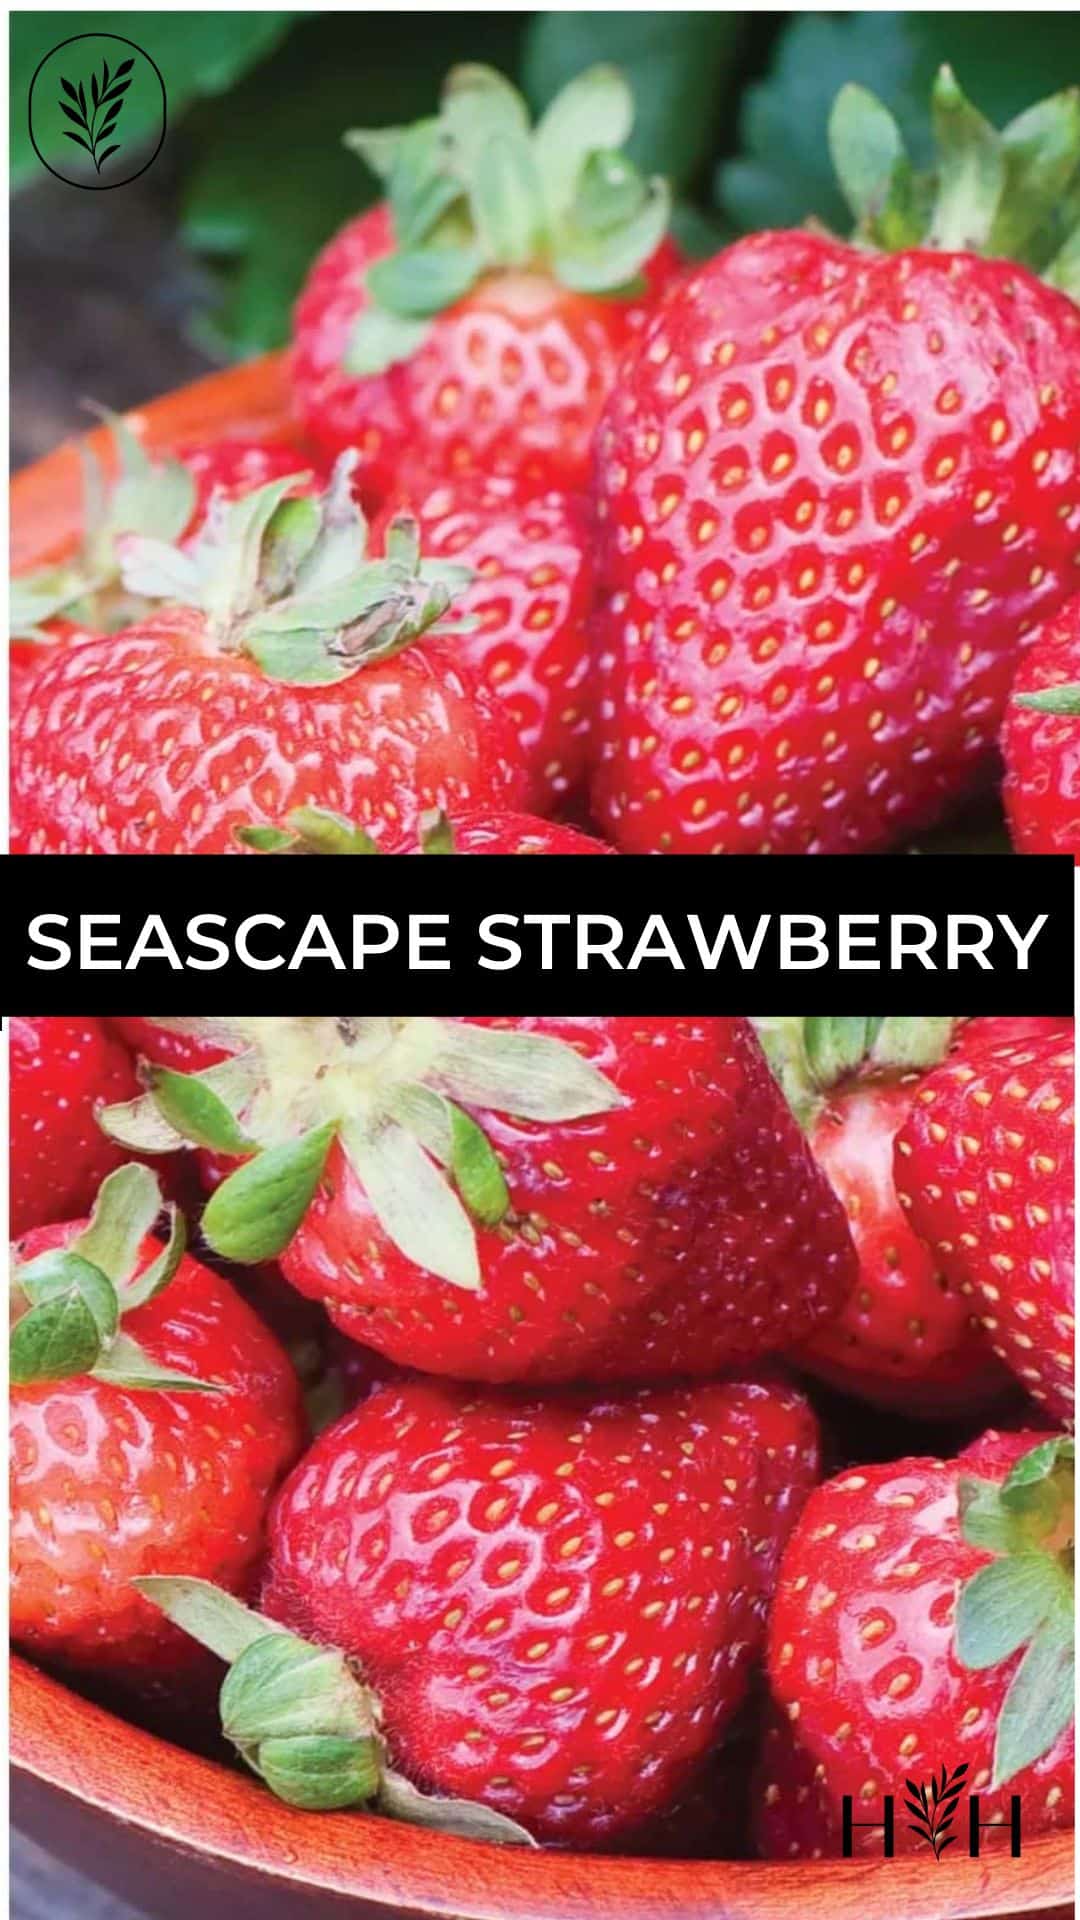 Seascape strawberry via @home4theharvest